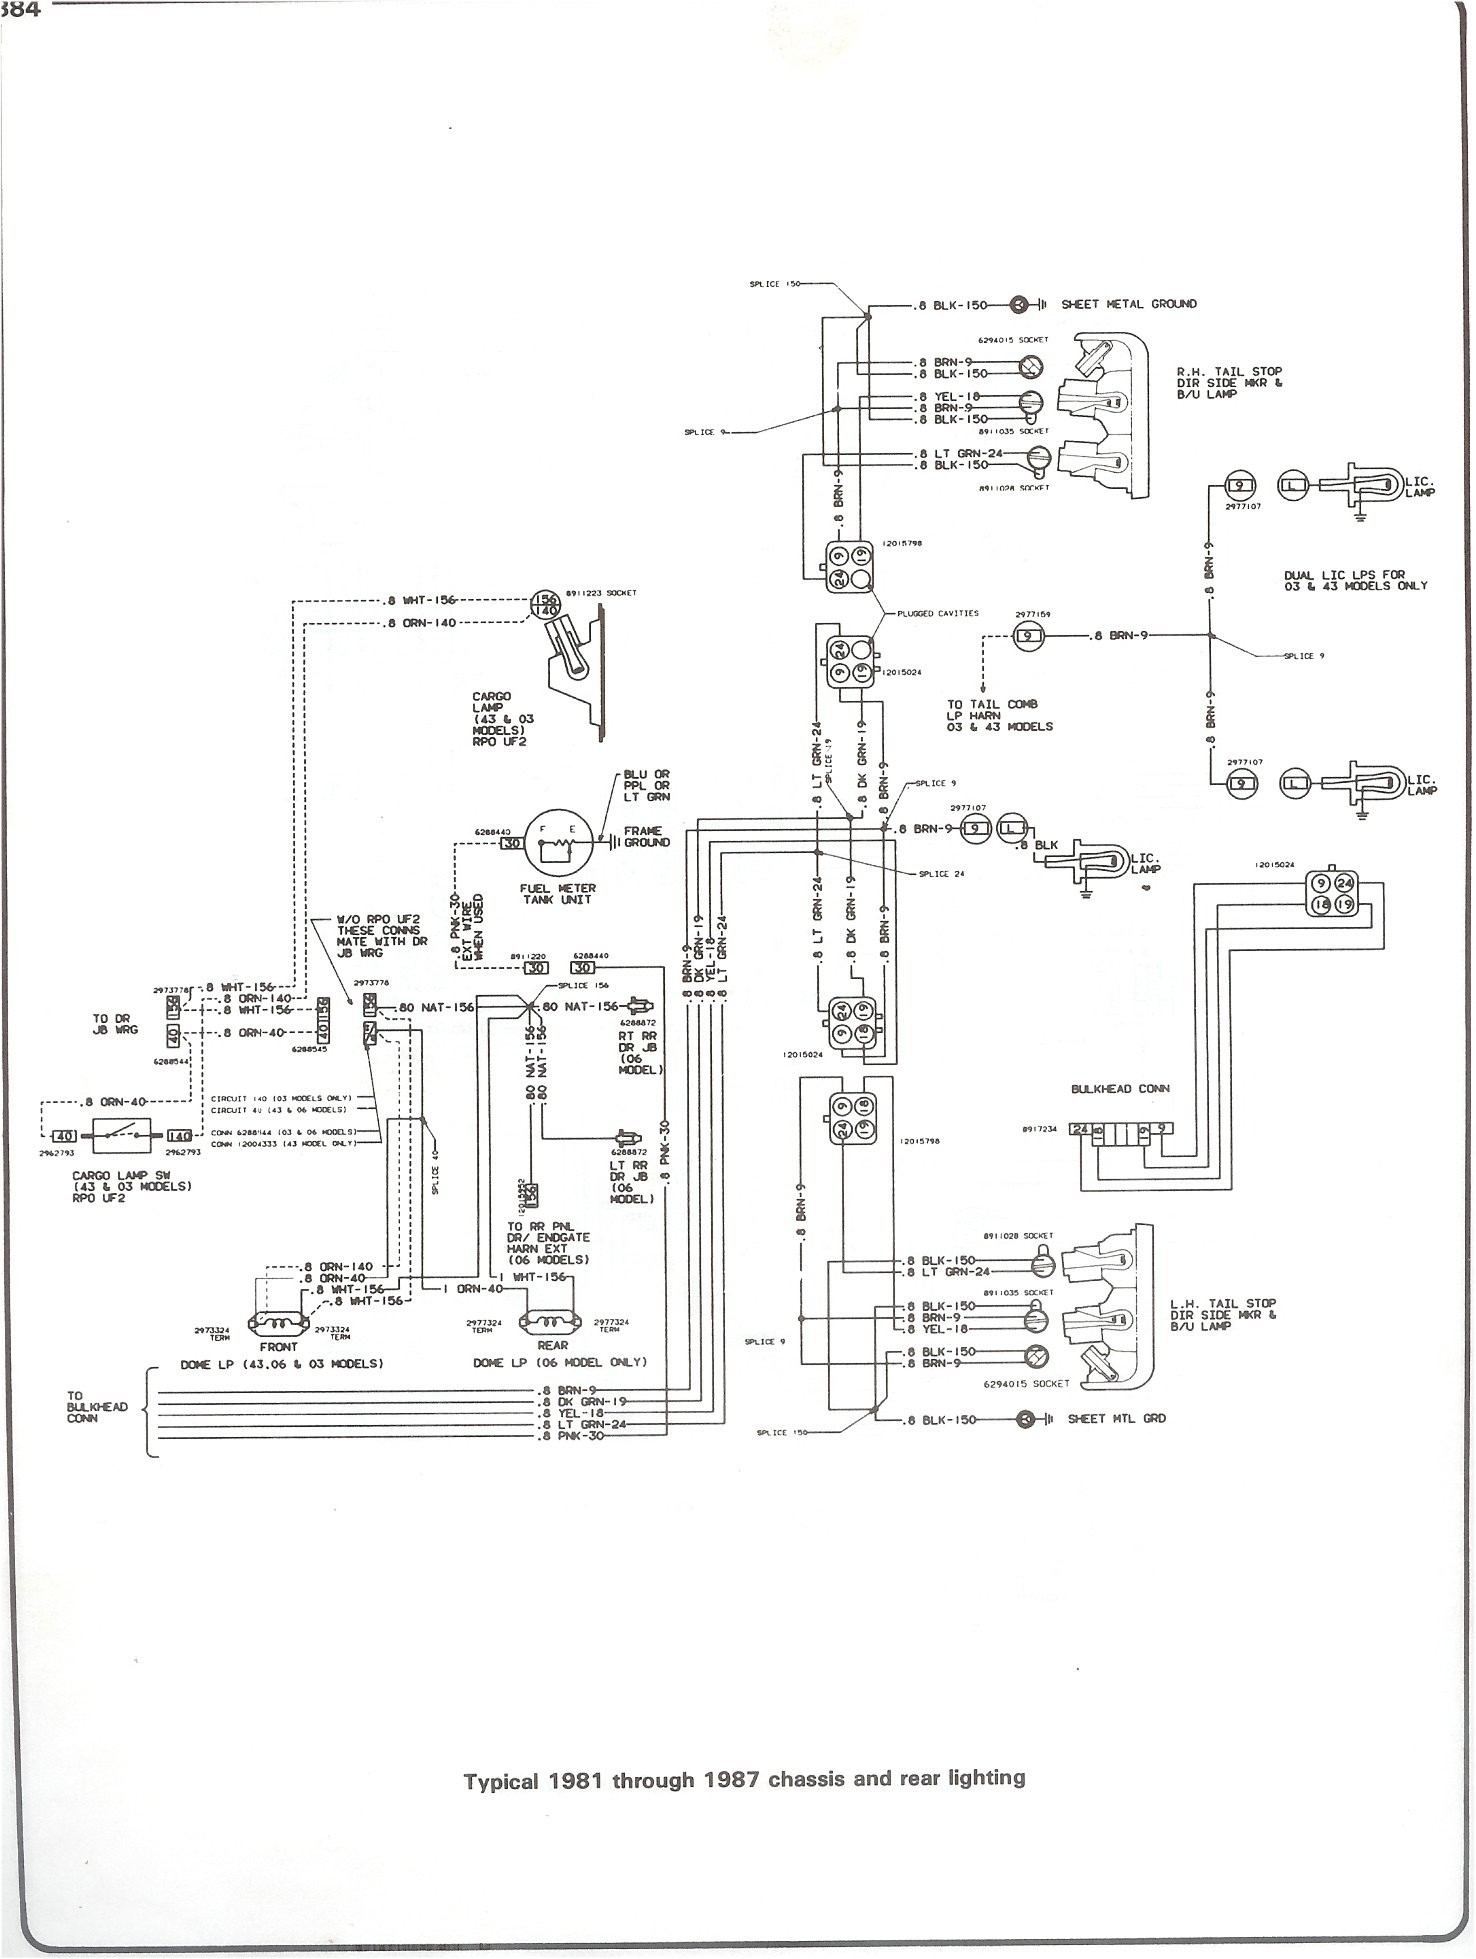 Diagram Chevyuck Wiring Engine Headlight plete Diagrams 1982 Chevy Truck Free For Automotive 1600